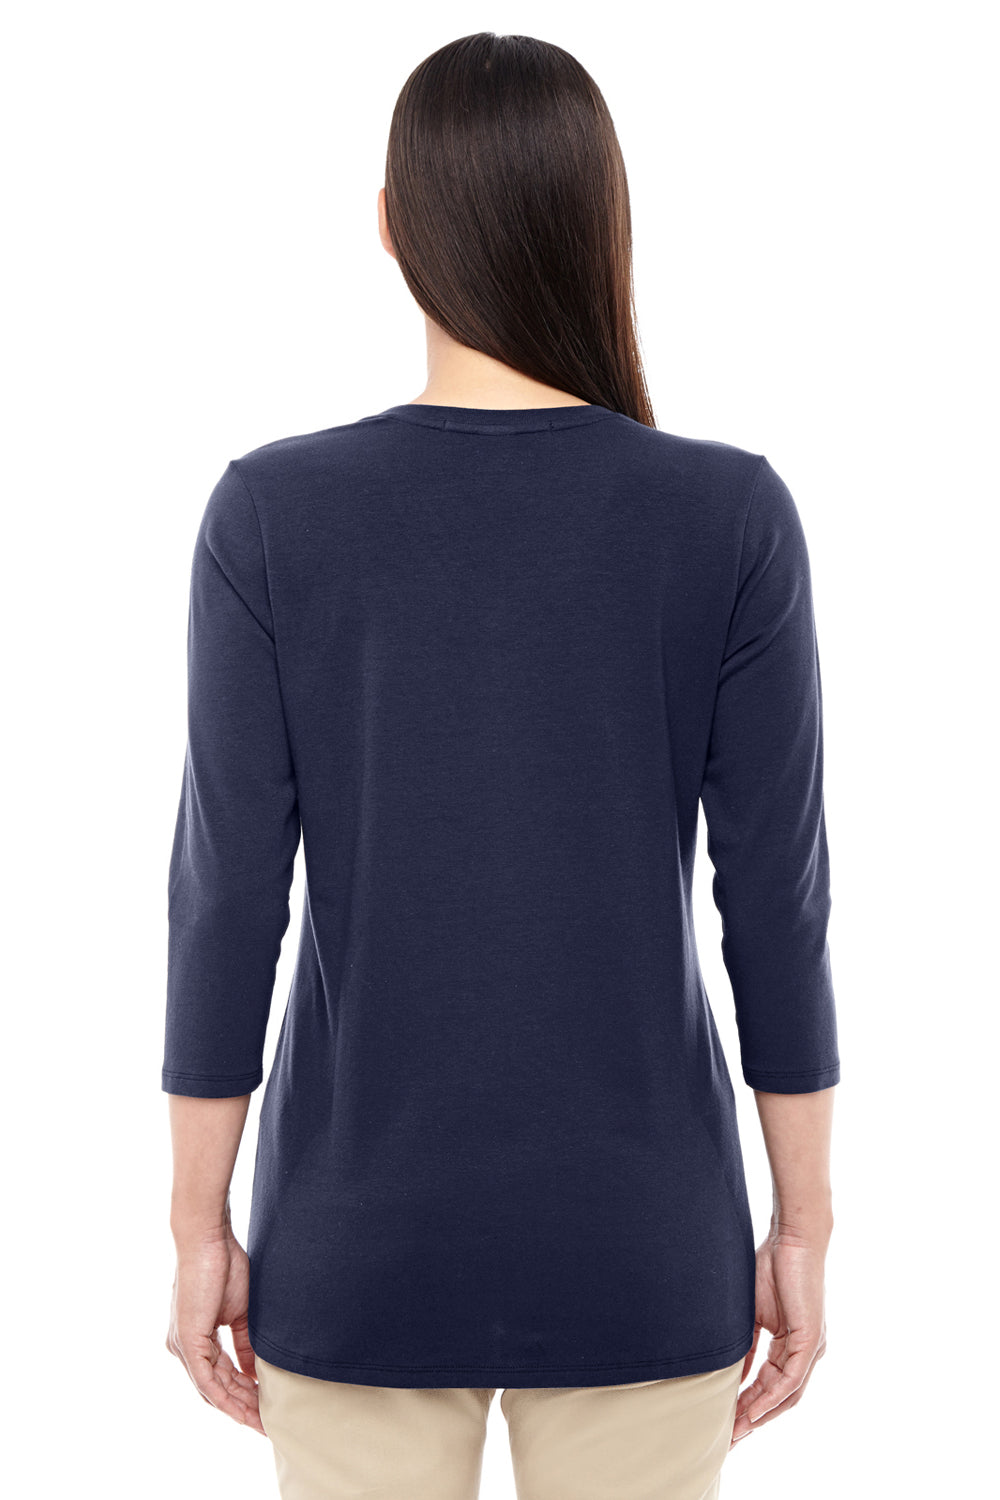 Devon & Jones DP184W Womens Perfect Fit 3/4 Sleeve V-Neck T-Shirt Navy Blue Back